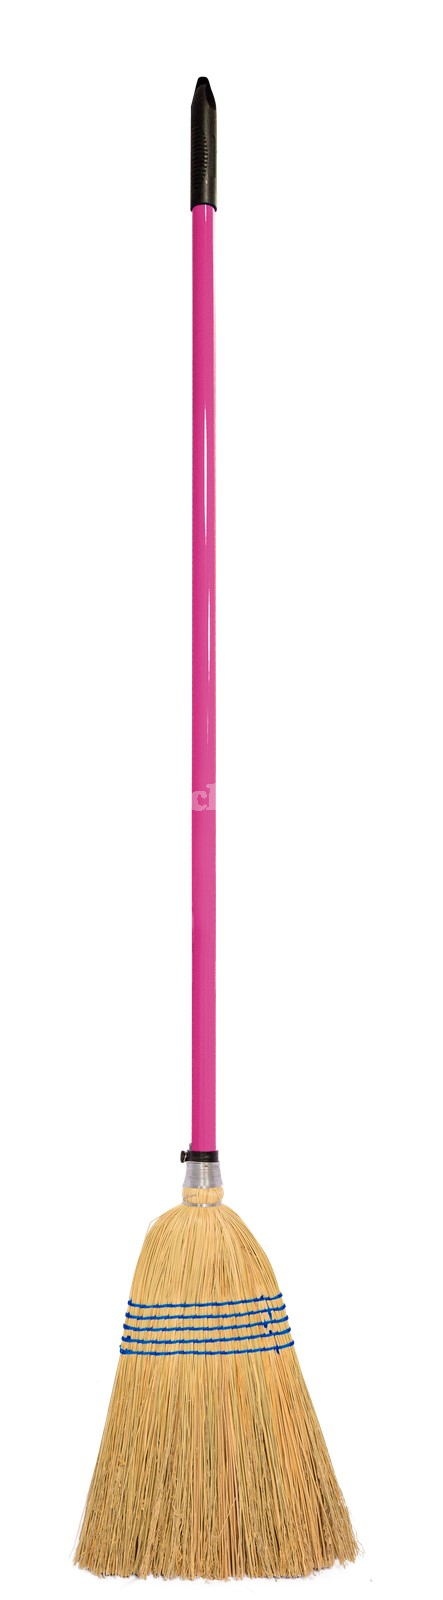 cleanx pink broom